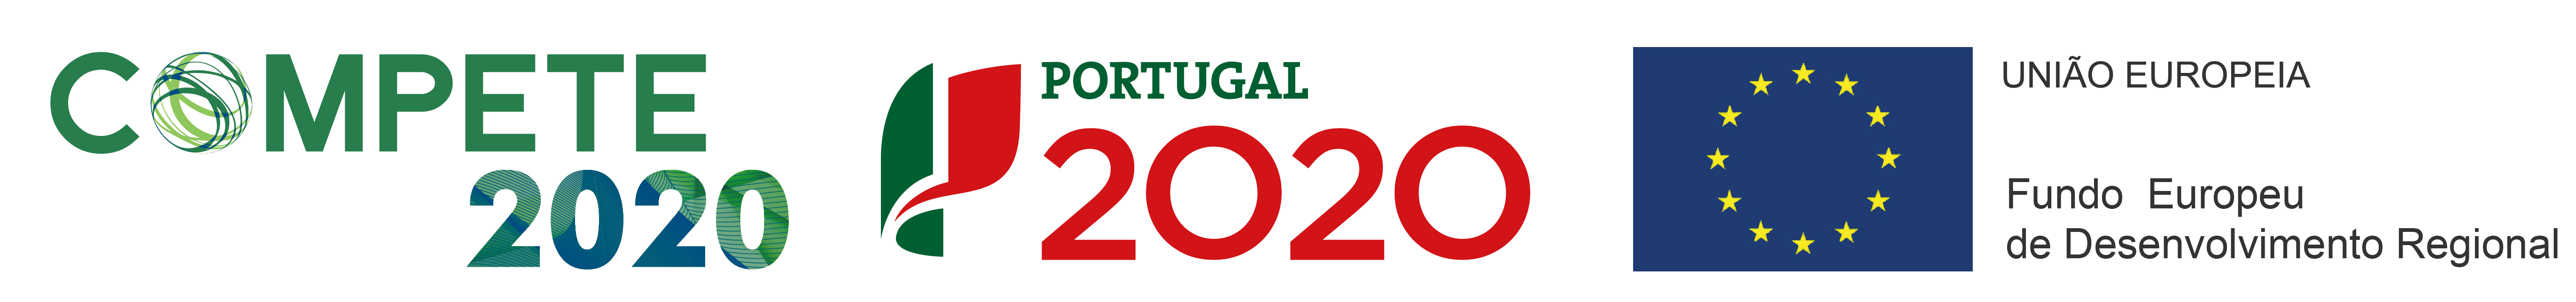 Logos Compete 2020, Portugal 2020, FEDER.